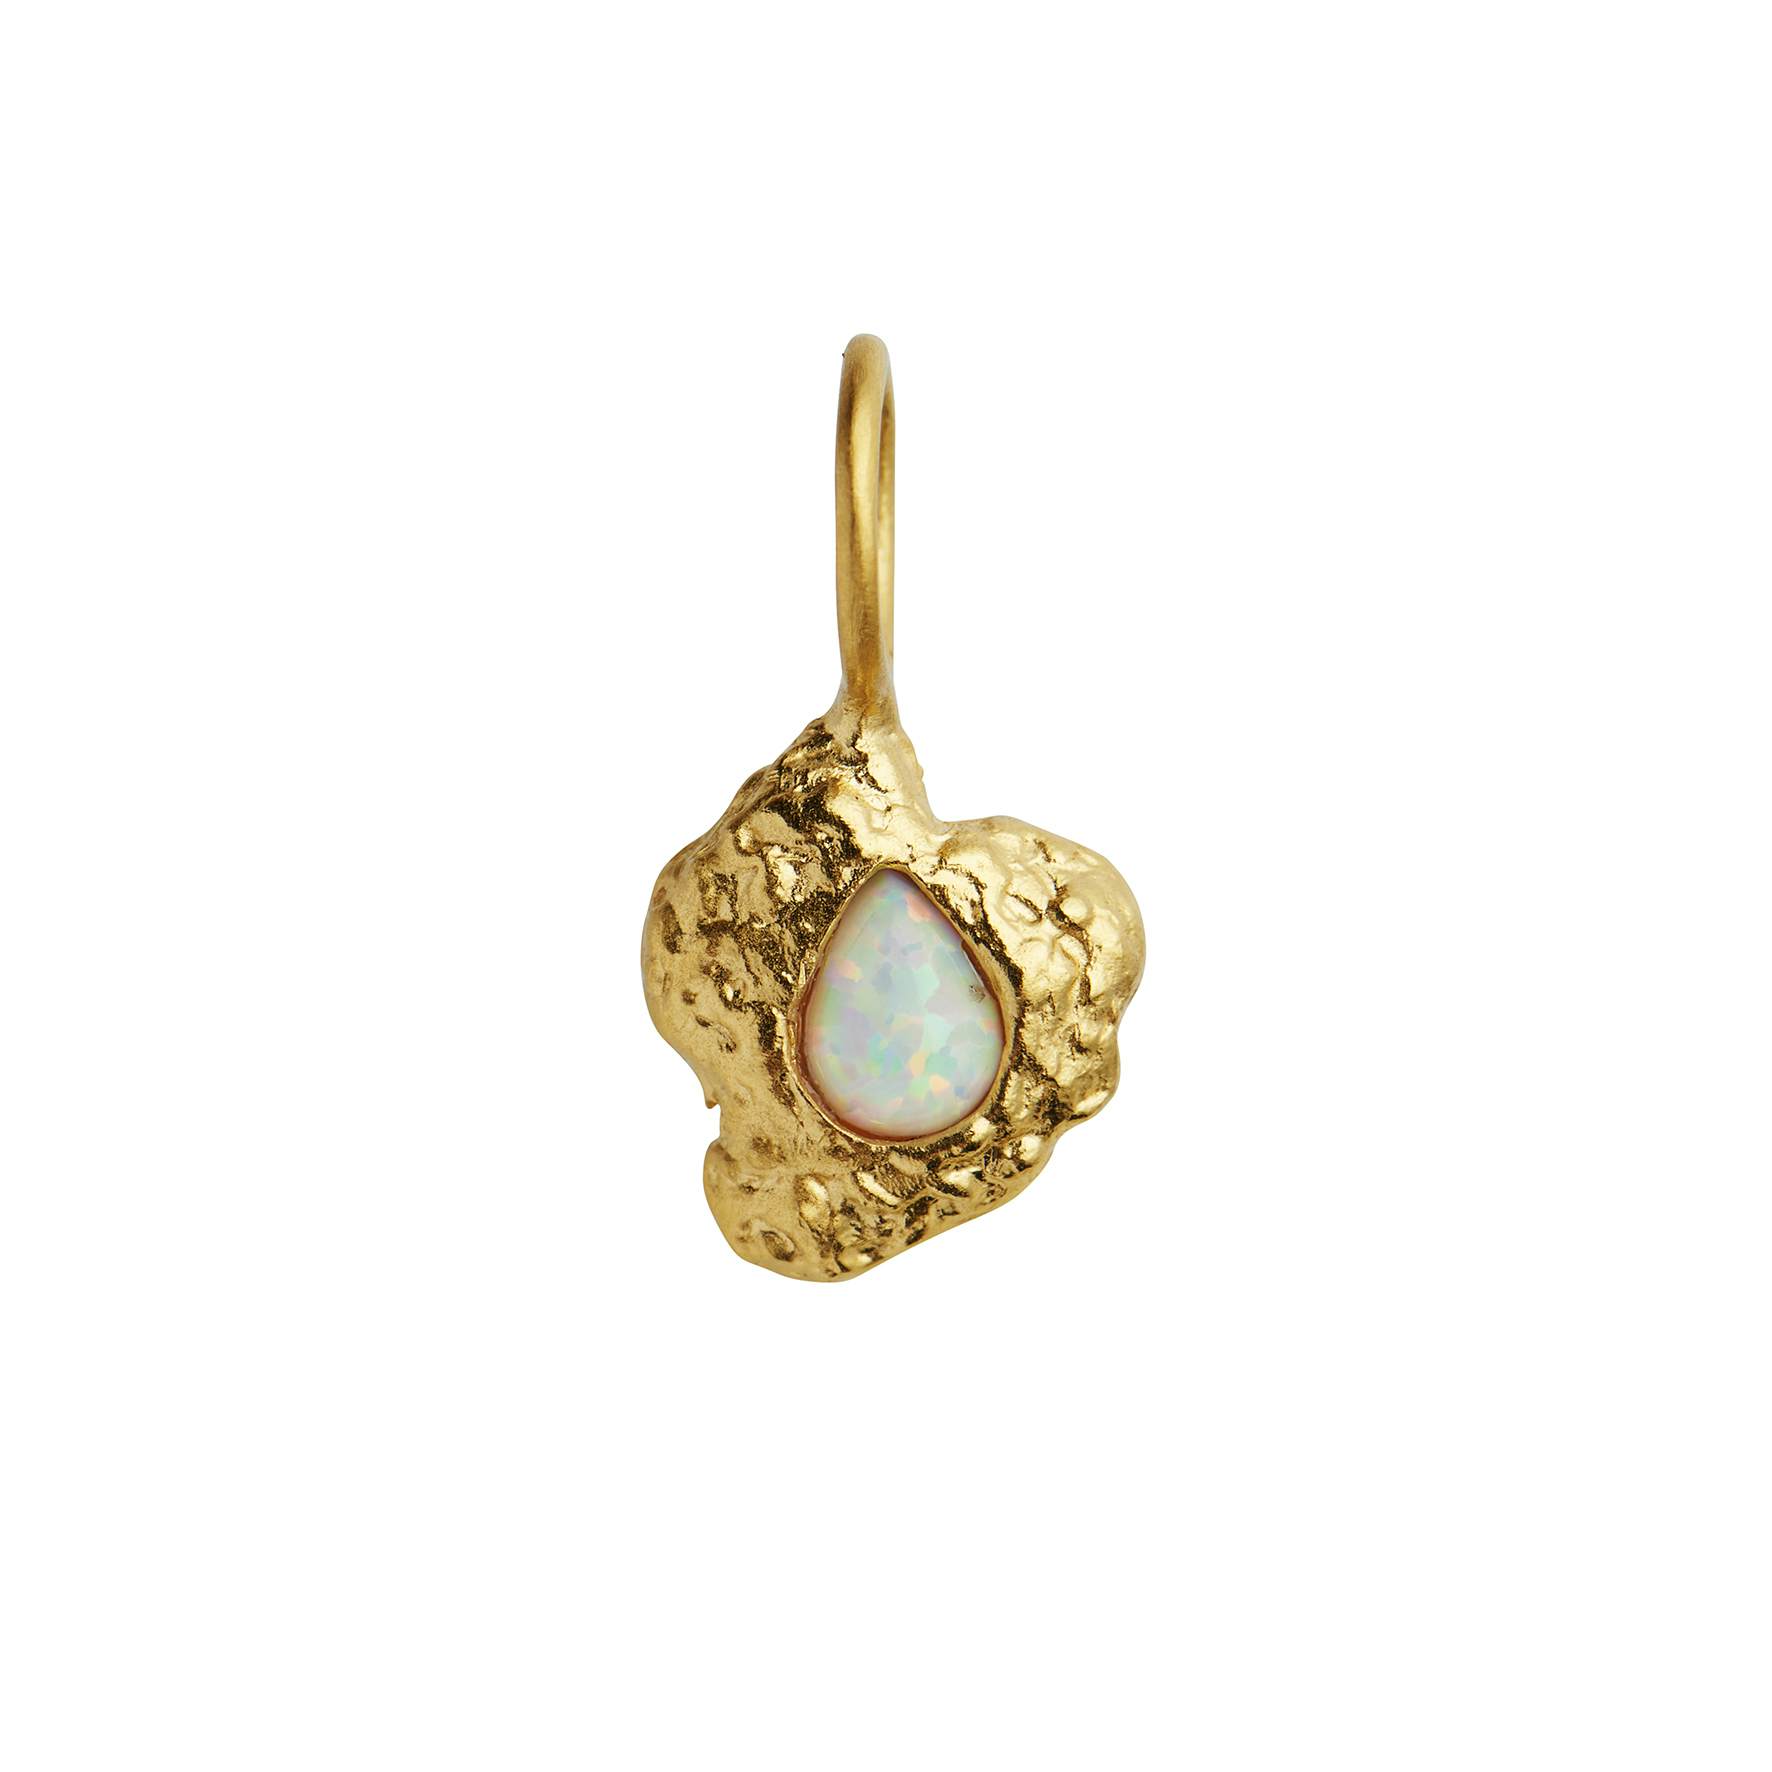 Ocean Glimpse Pendant With Opal fra STINE A Jewelry i Forgylt-Sølv Sterling 925